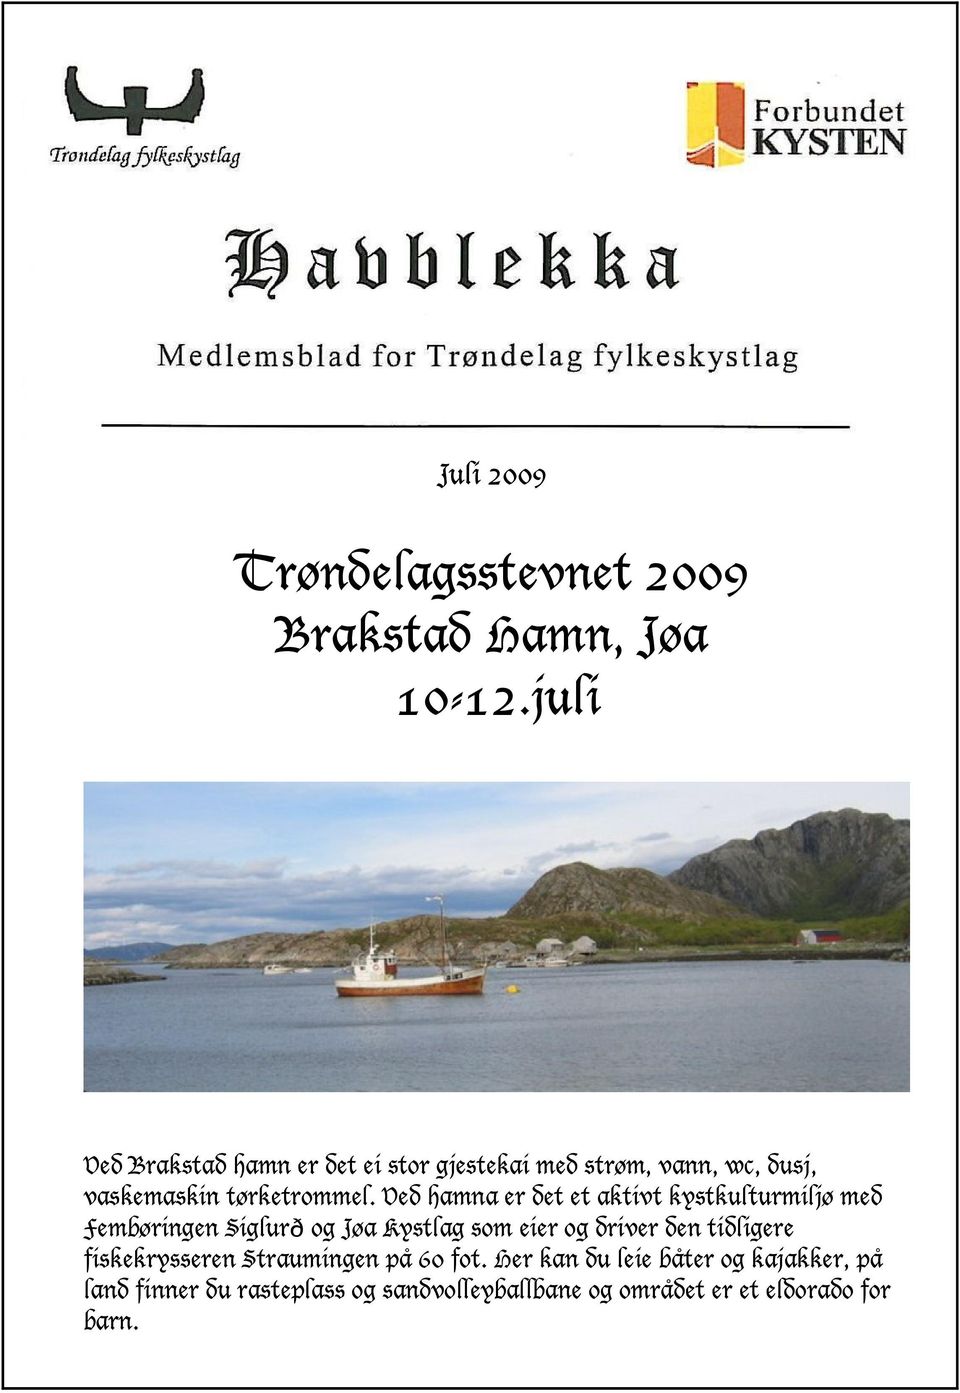 Ved hamna er det et aktivt kystkulturmiljø med Fembøringen Siglurð og Jøa Kystlag som eier og driver den